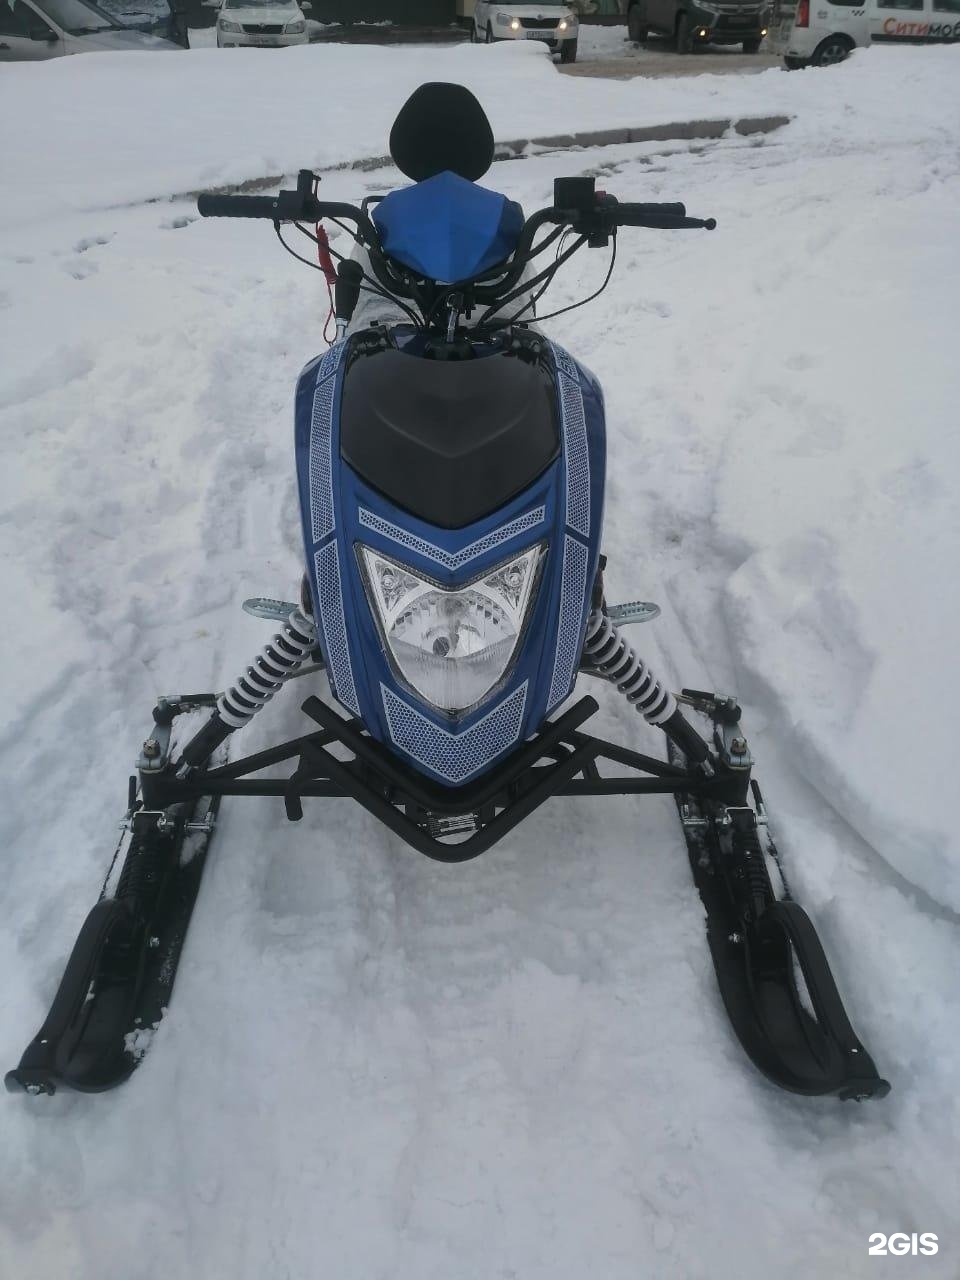 Икудзо Хантер снегоход. Sharmax 200cc с Globaldrive. Эскудо Хантер снегоход. Снегоход Икудзо Хантер описание панели.